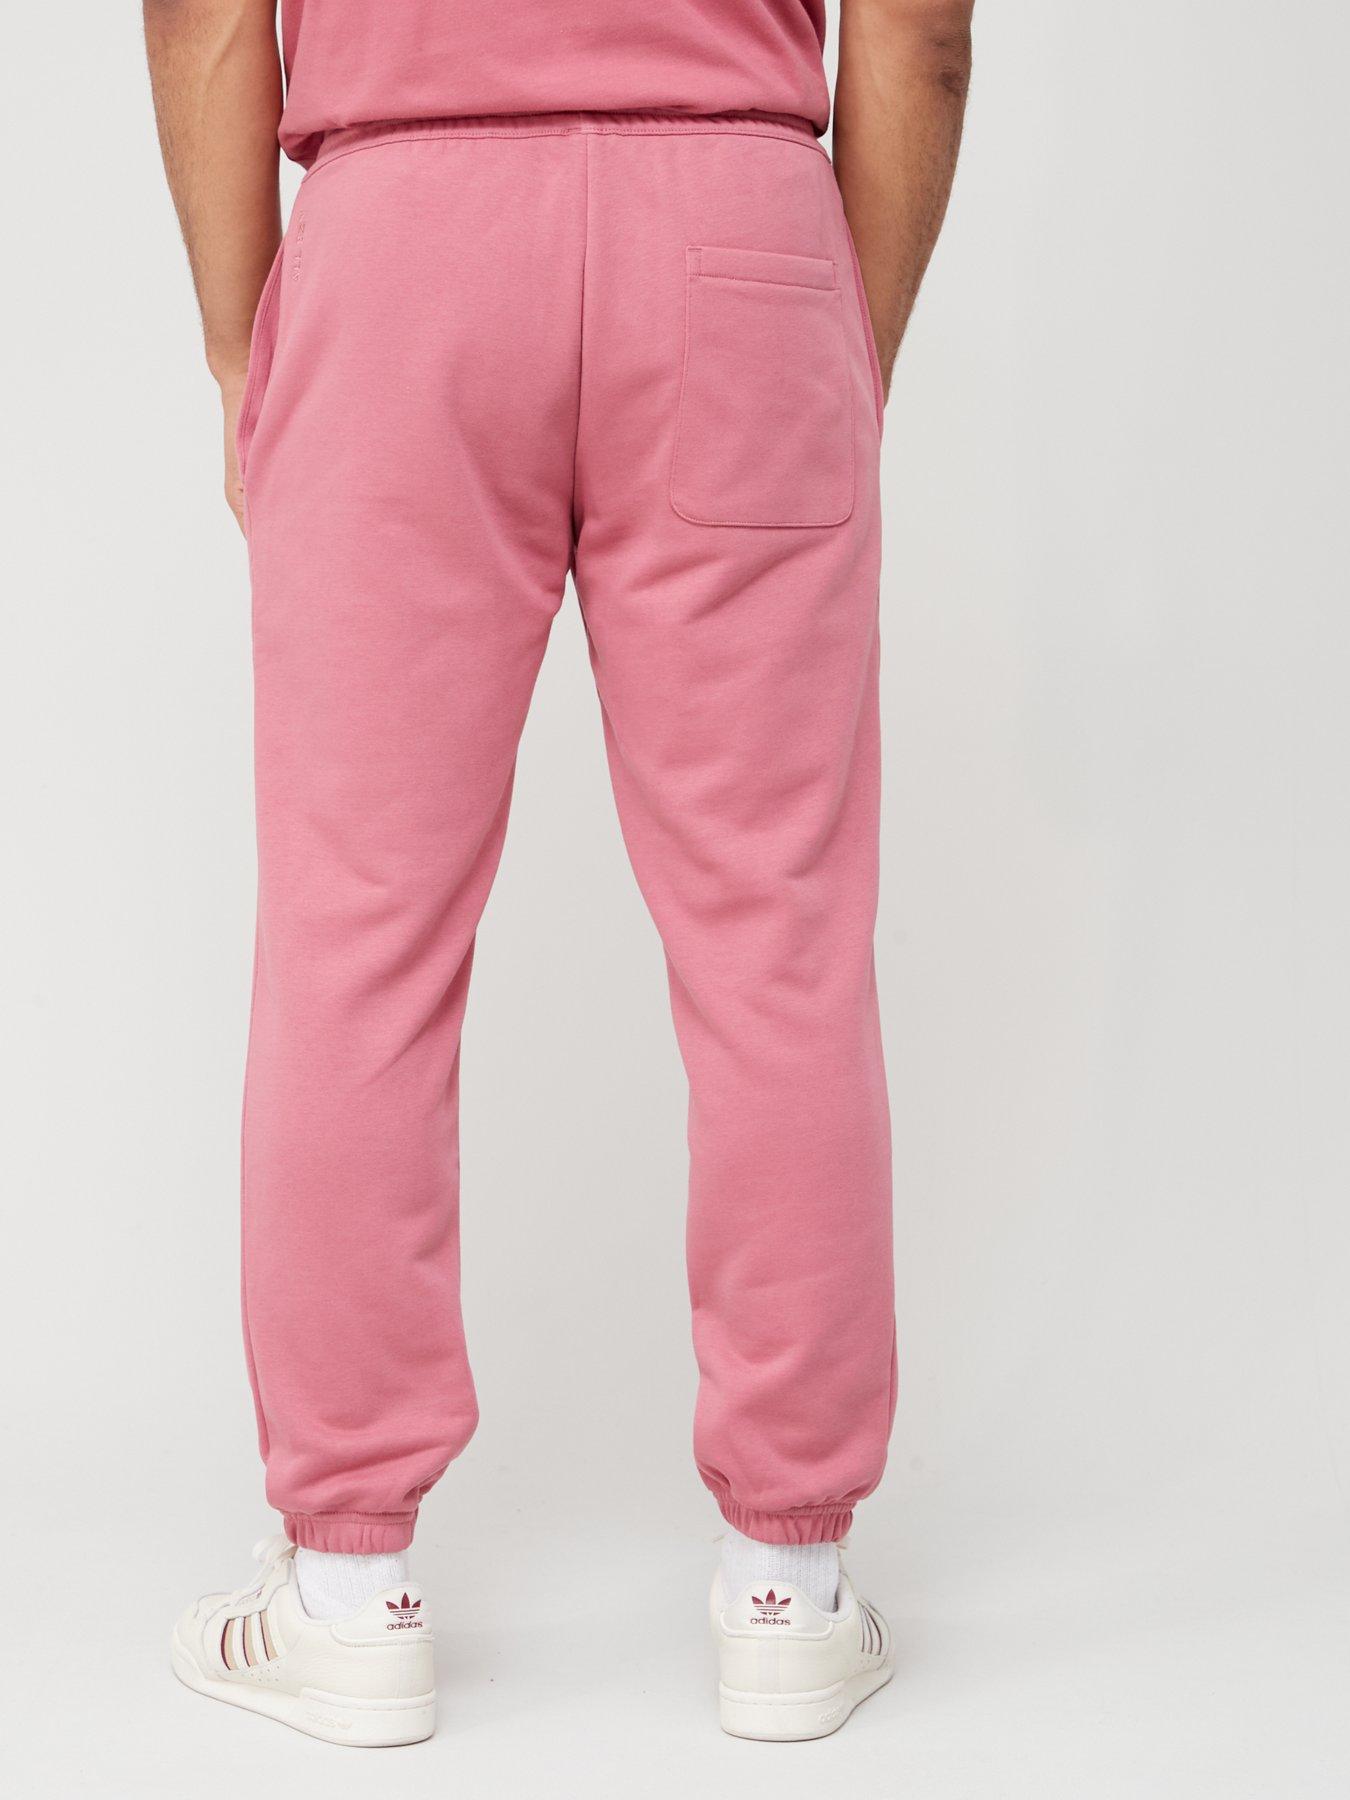 Mens Pink Sweatpants 